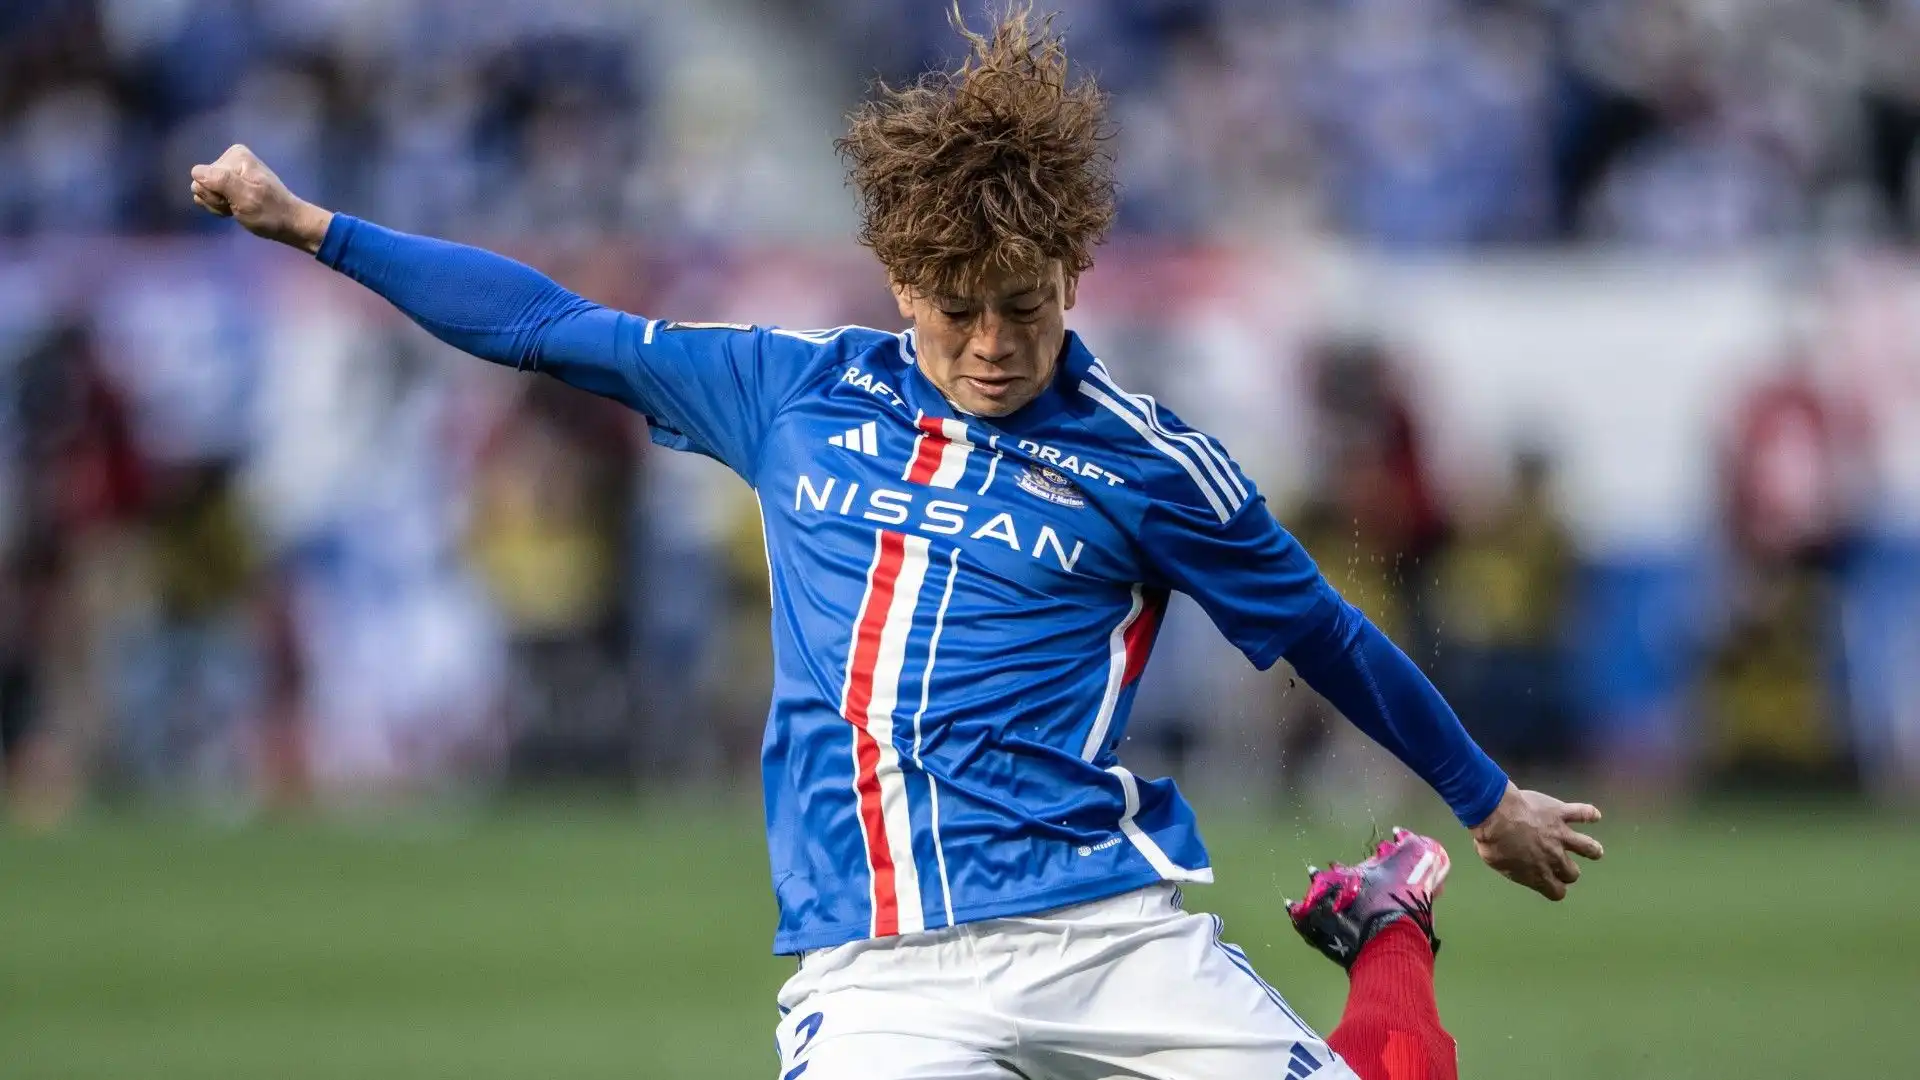 Terzino sinistro: Katsuya Nagato gioca nei Yokohama Marinos e vale 1 milioni di euro